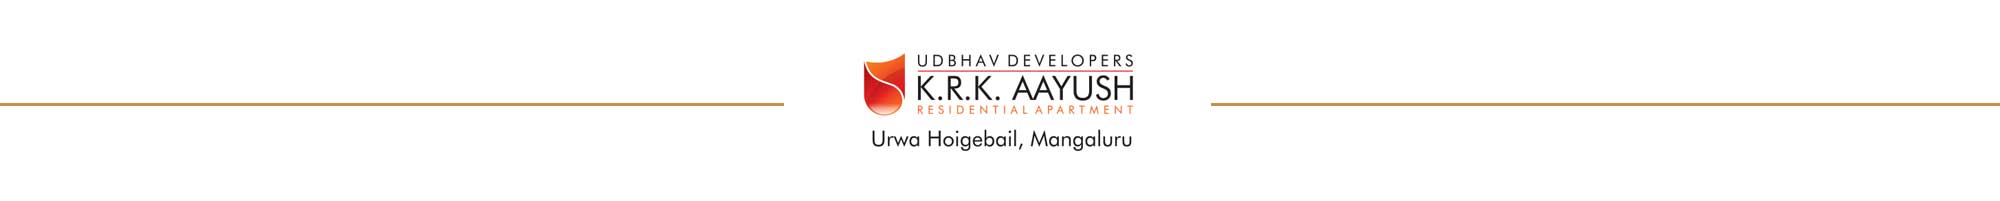 krk-aayush-logo-w-line